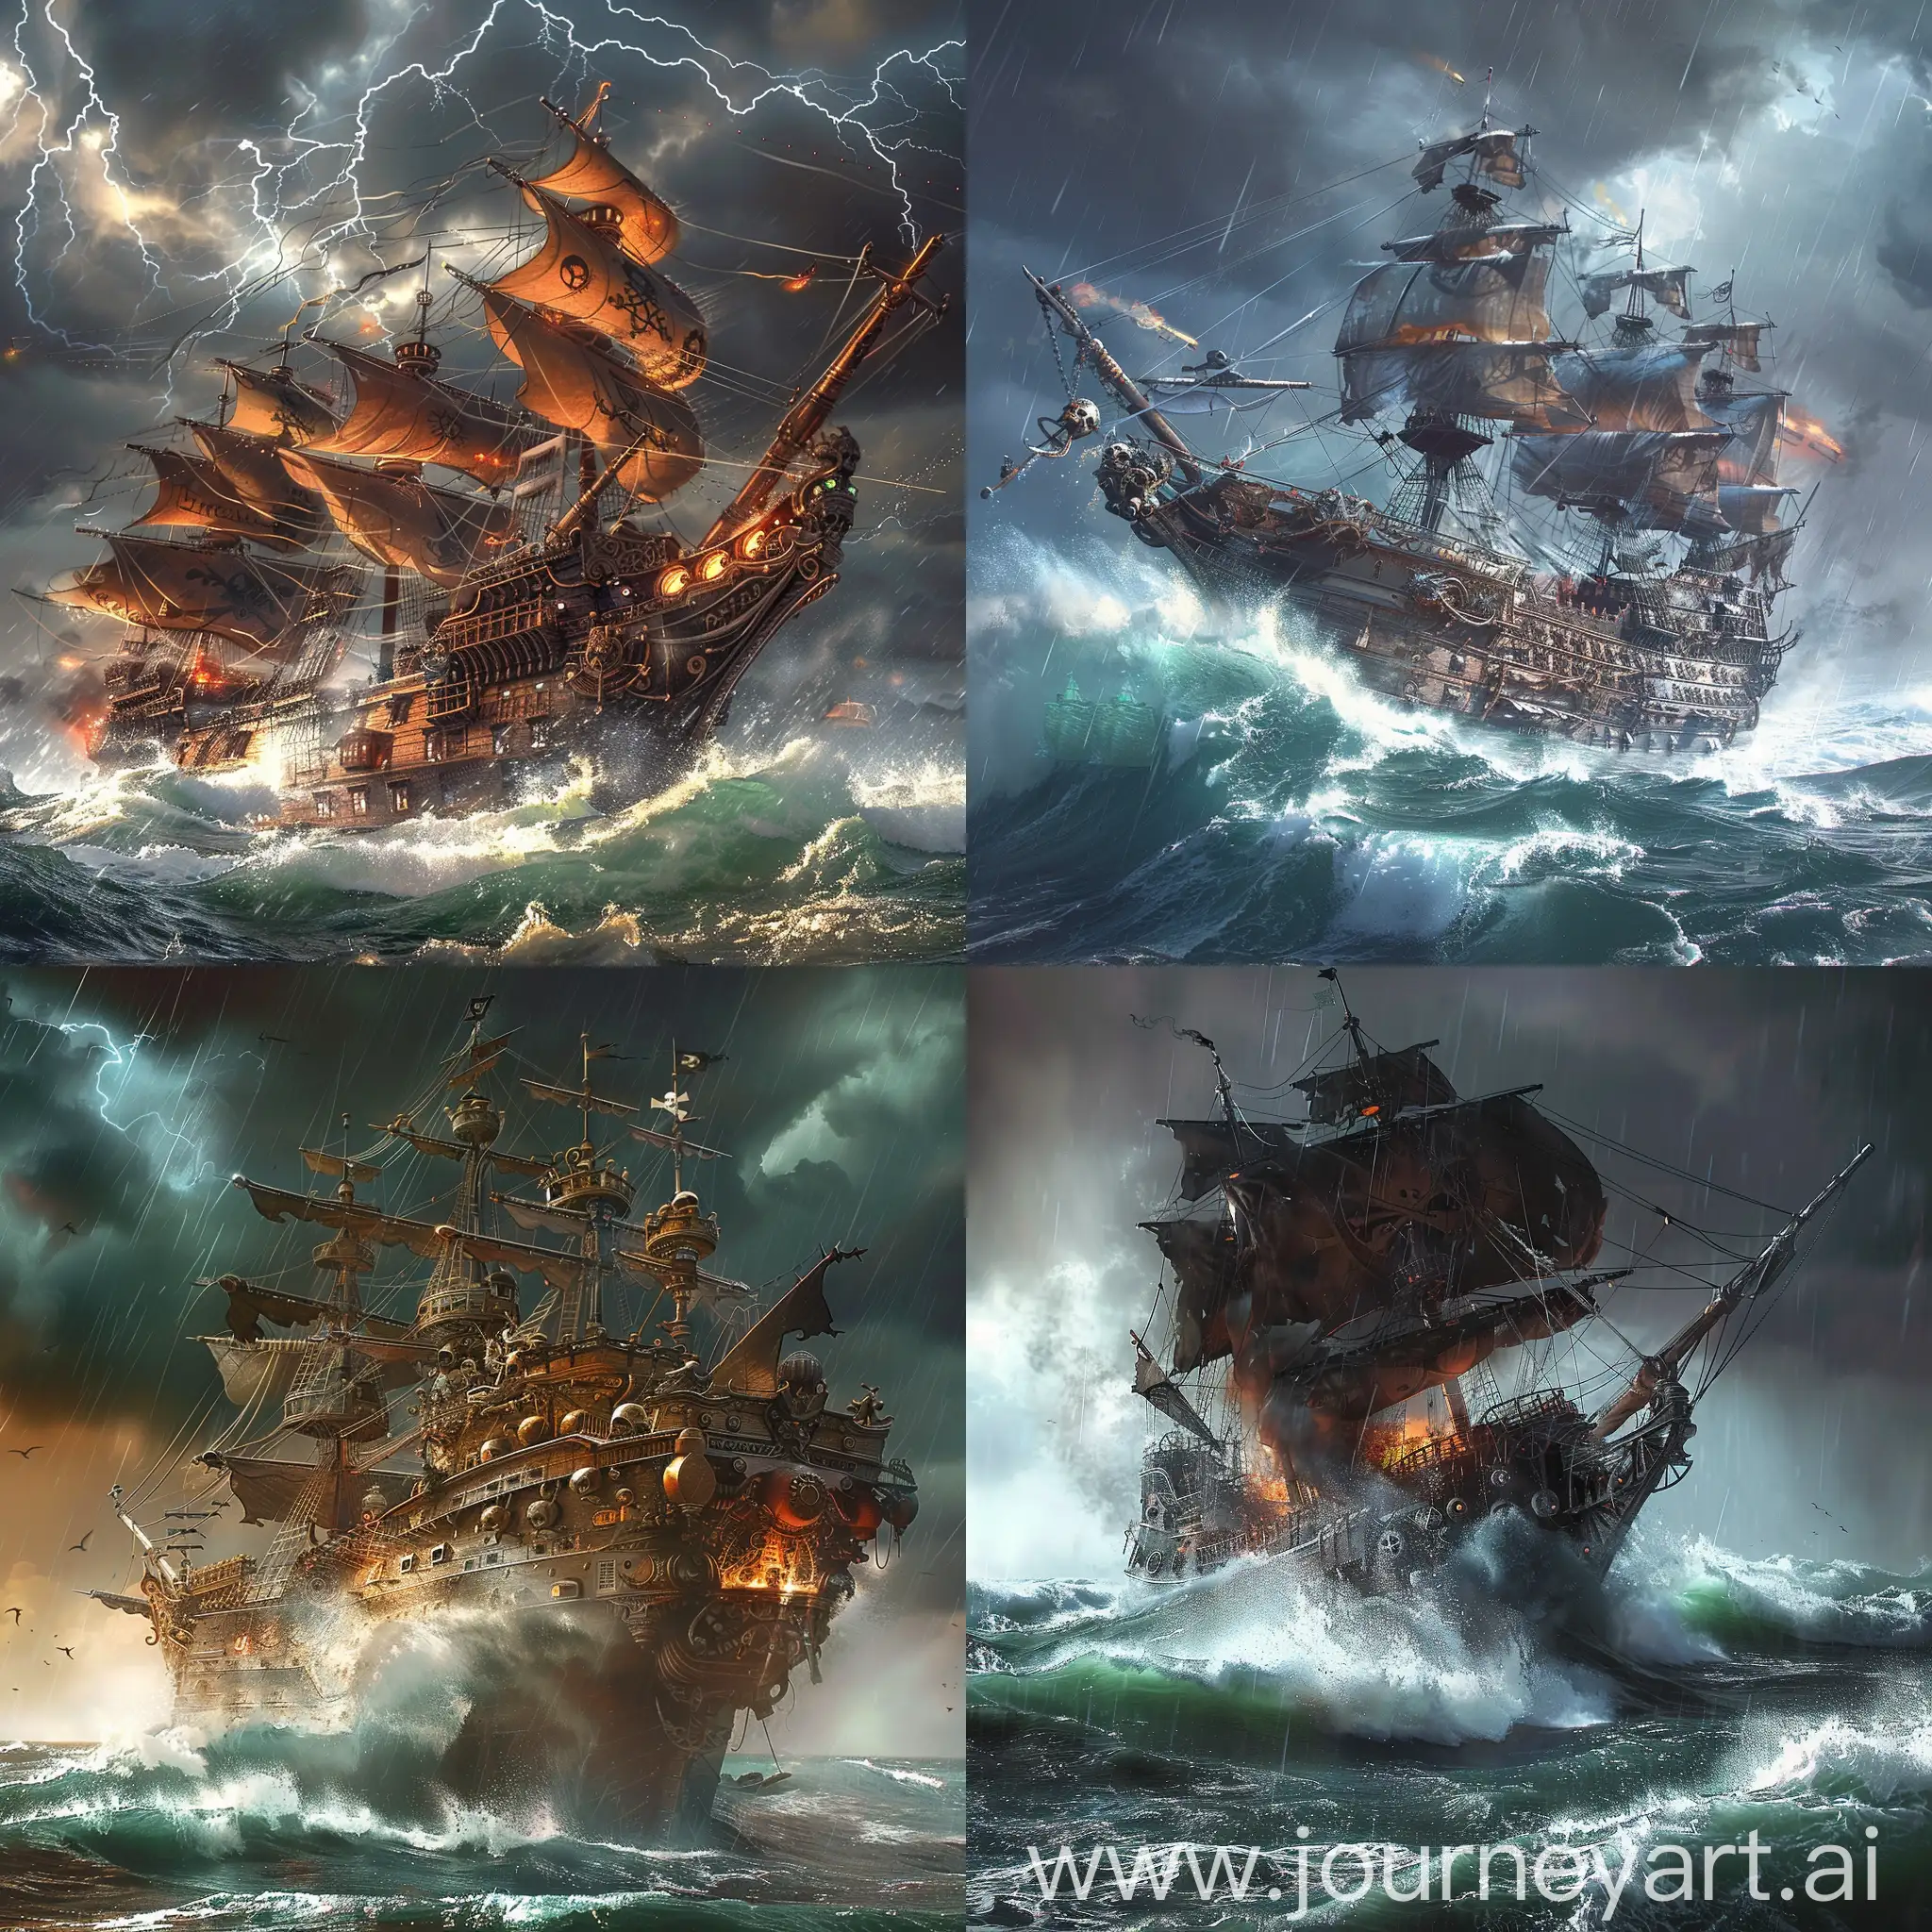 Epic-Steampunk-Pirate-Ship-Battling-Raging-Stormy-Seas